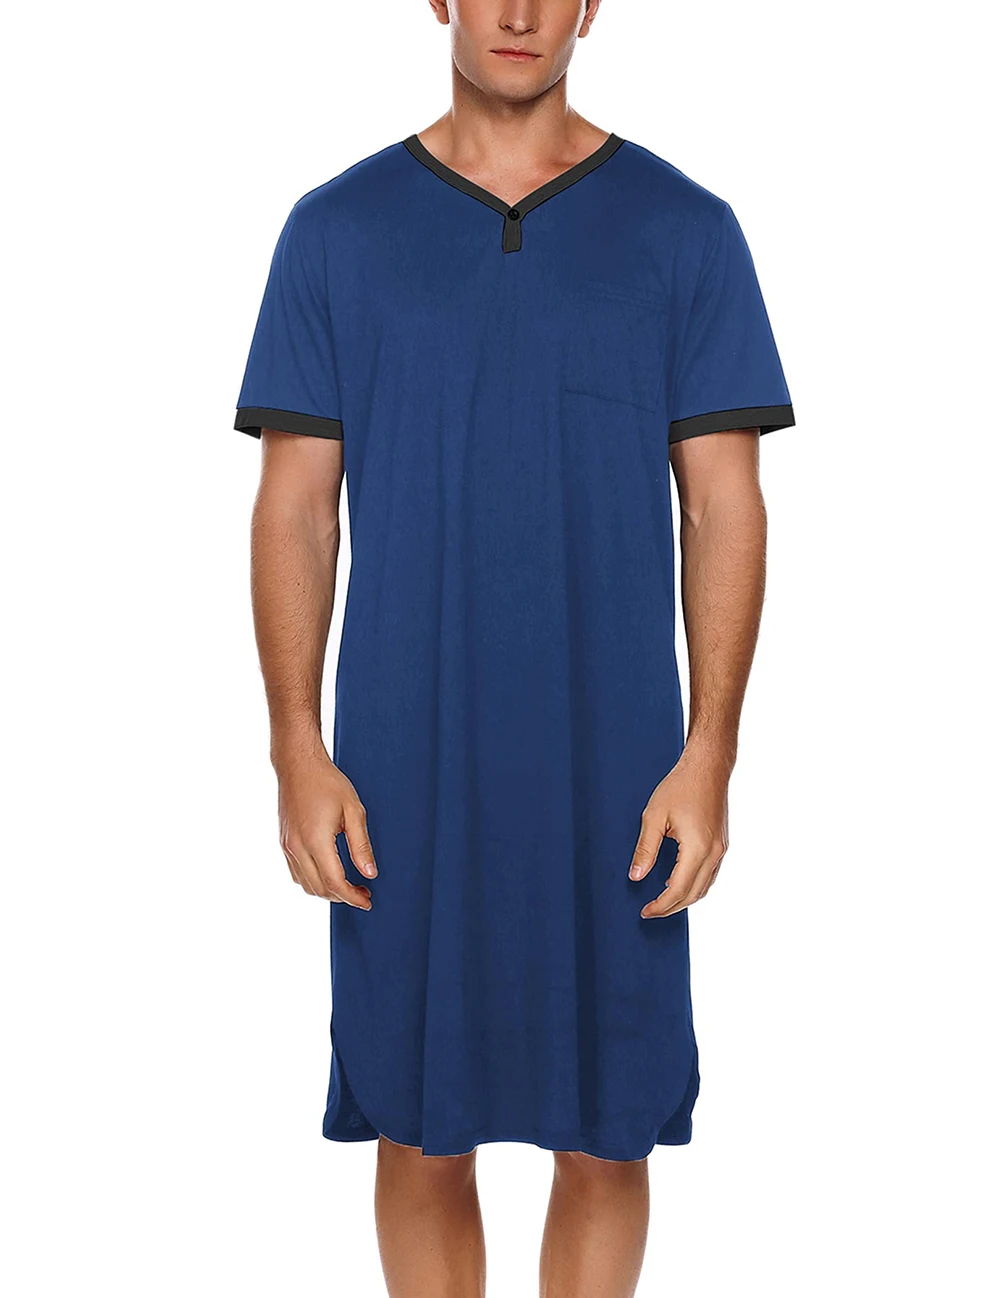  Men's Nightshirts Cool Shirts for Men Short Sleeve